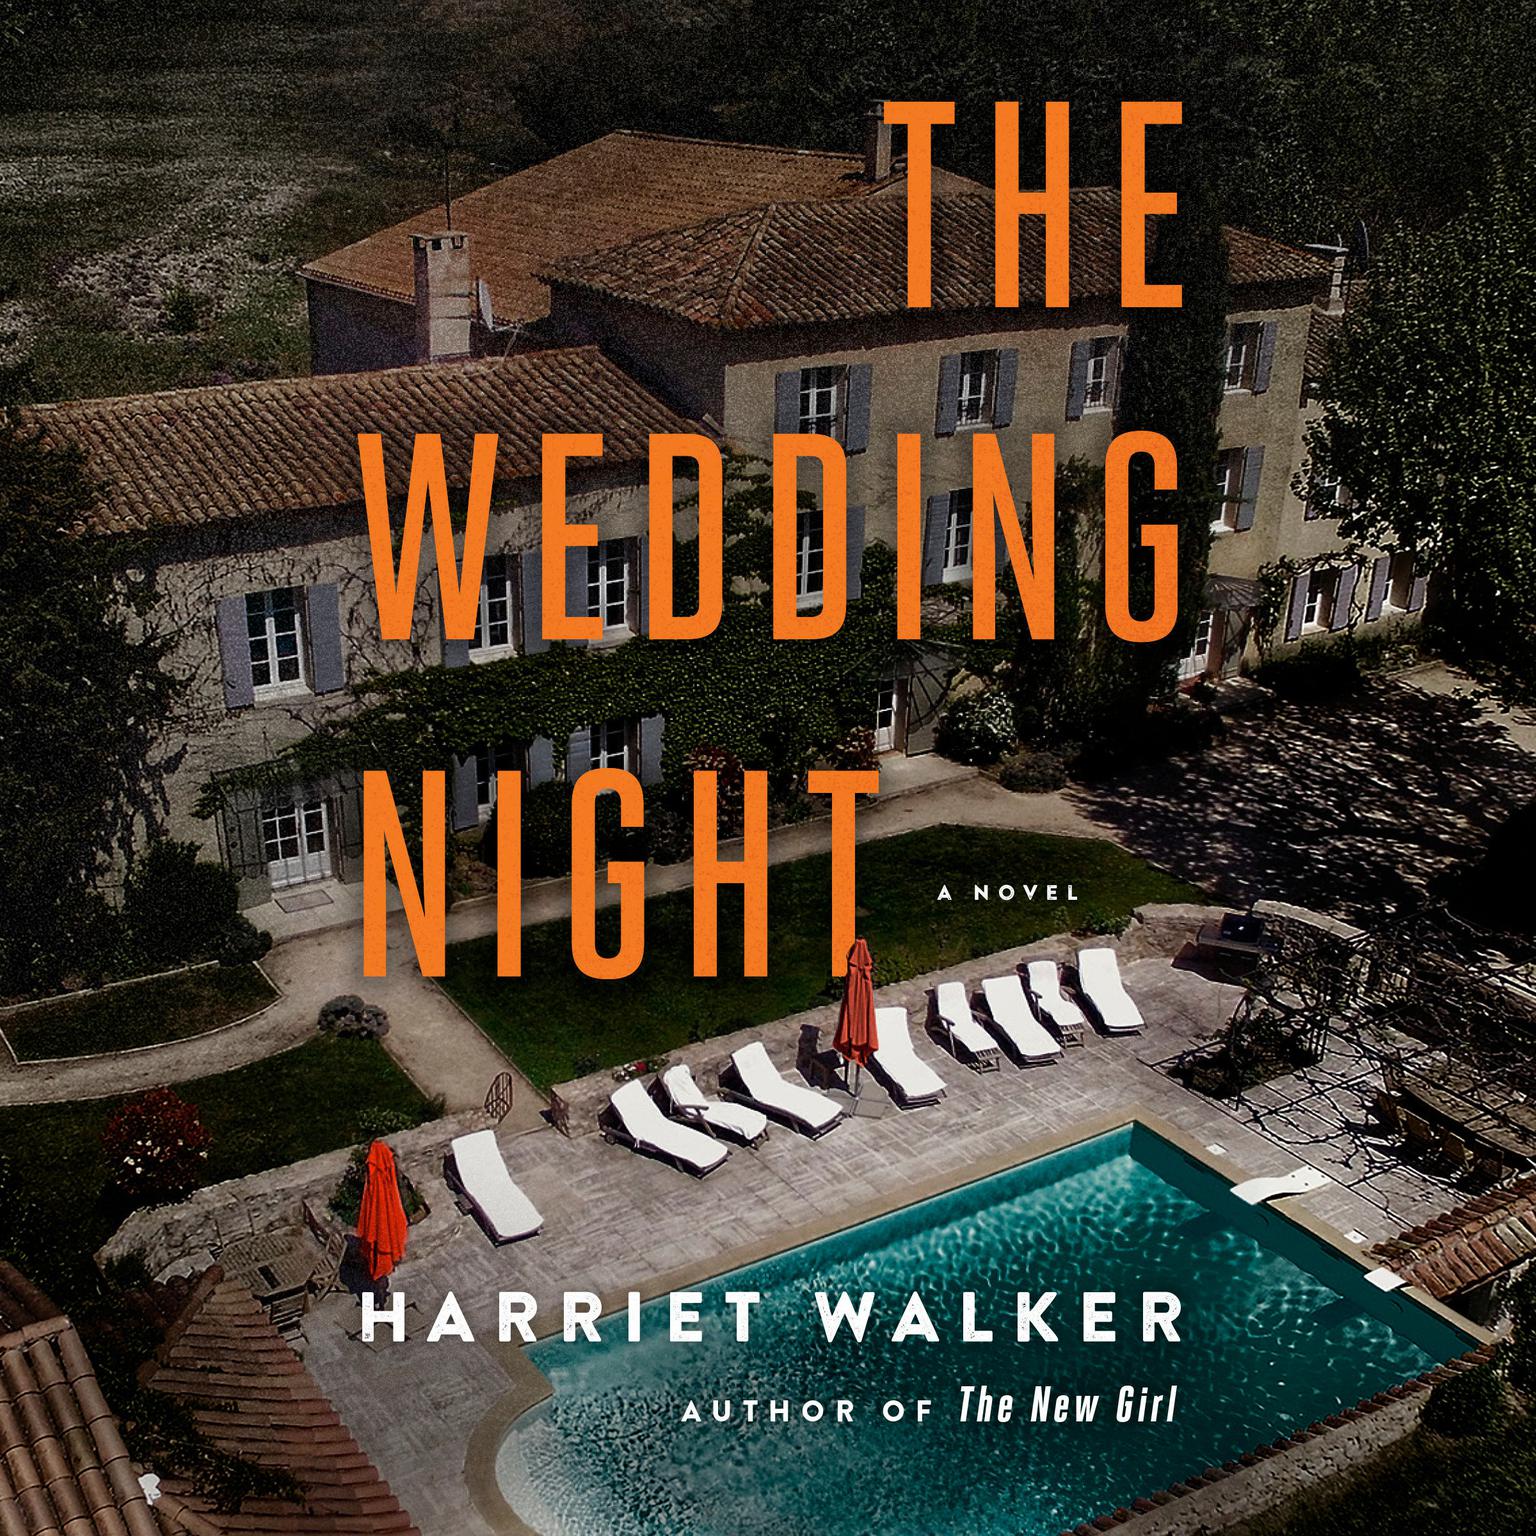 The Wedding Night: A Novel Audiobook, by Harriet Walker